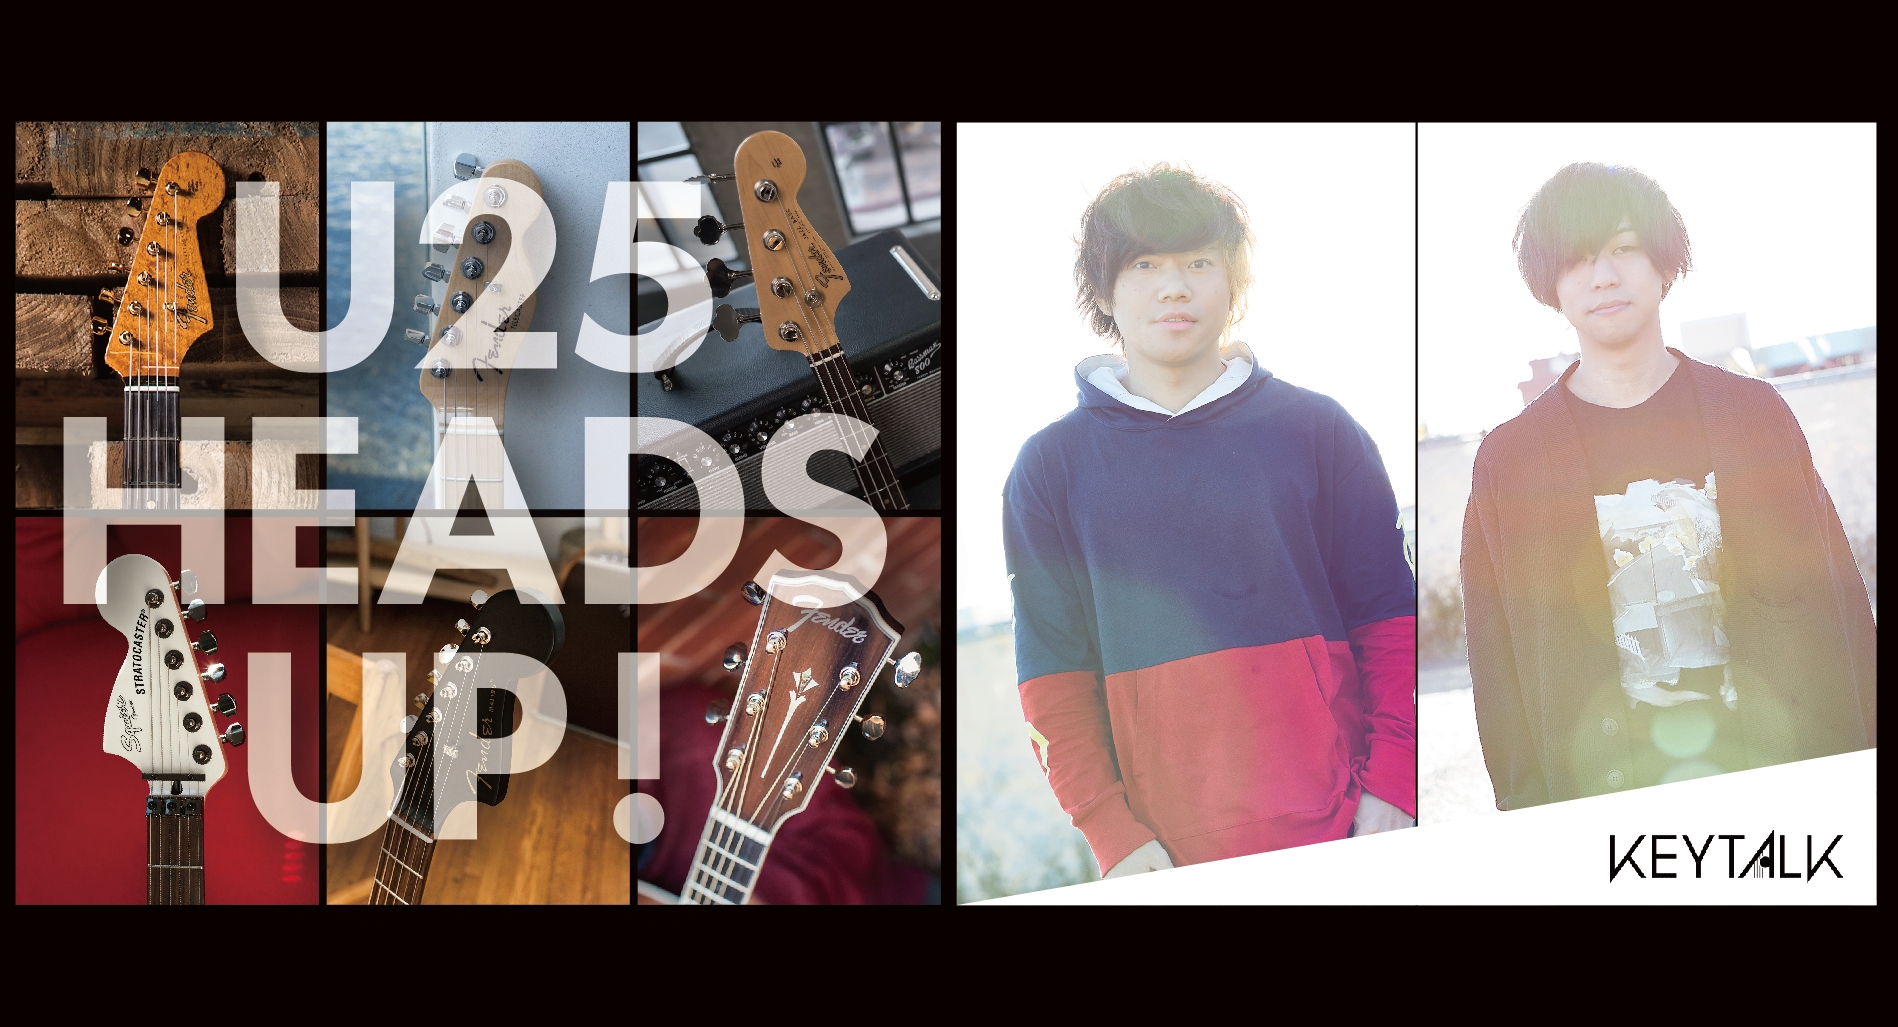 Fender U25 Heads Up 次世代プレイヤー応援キャンペーン Keytalk 寺中友将 Vo Gt 首藤義勝 Vo Ba によるビギナー向けワークショップに参加しよう フェンダーミュージックのプレスリリース